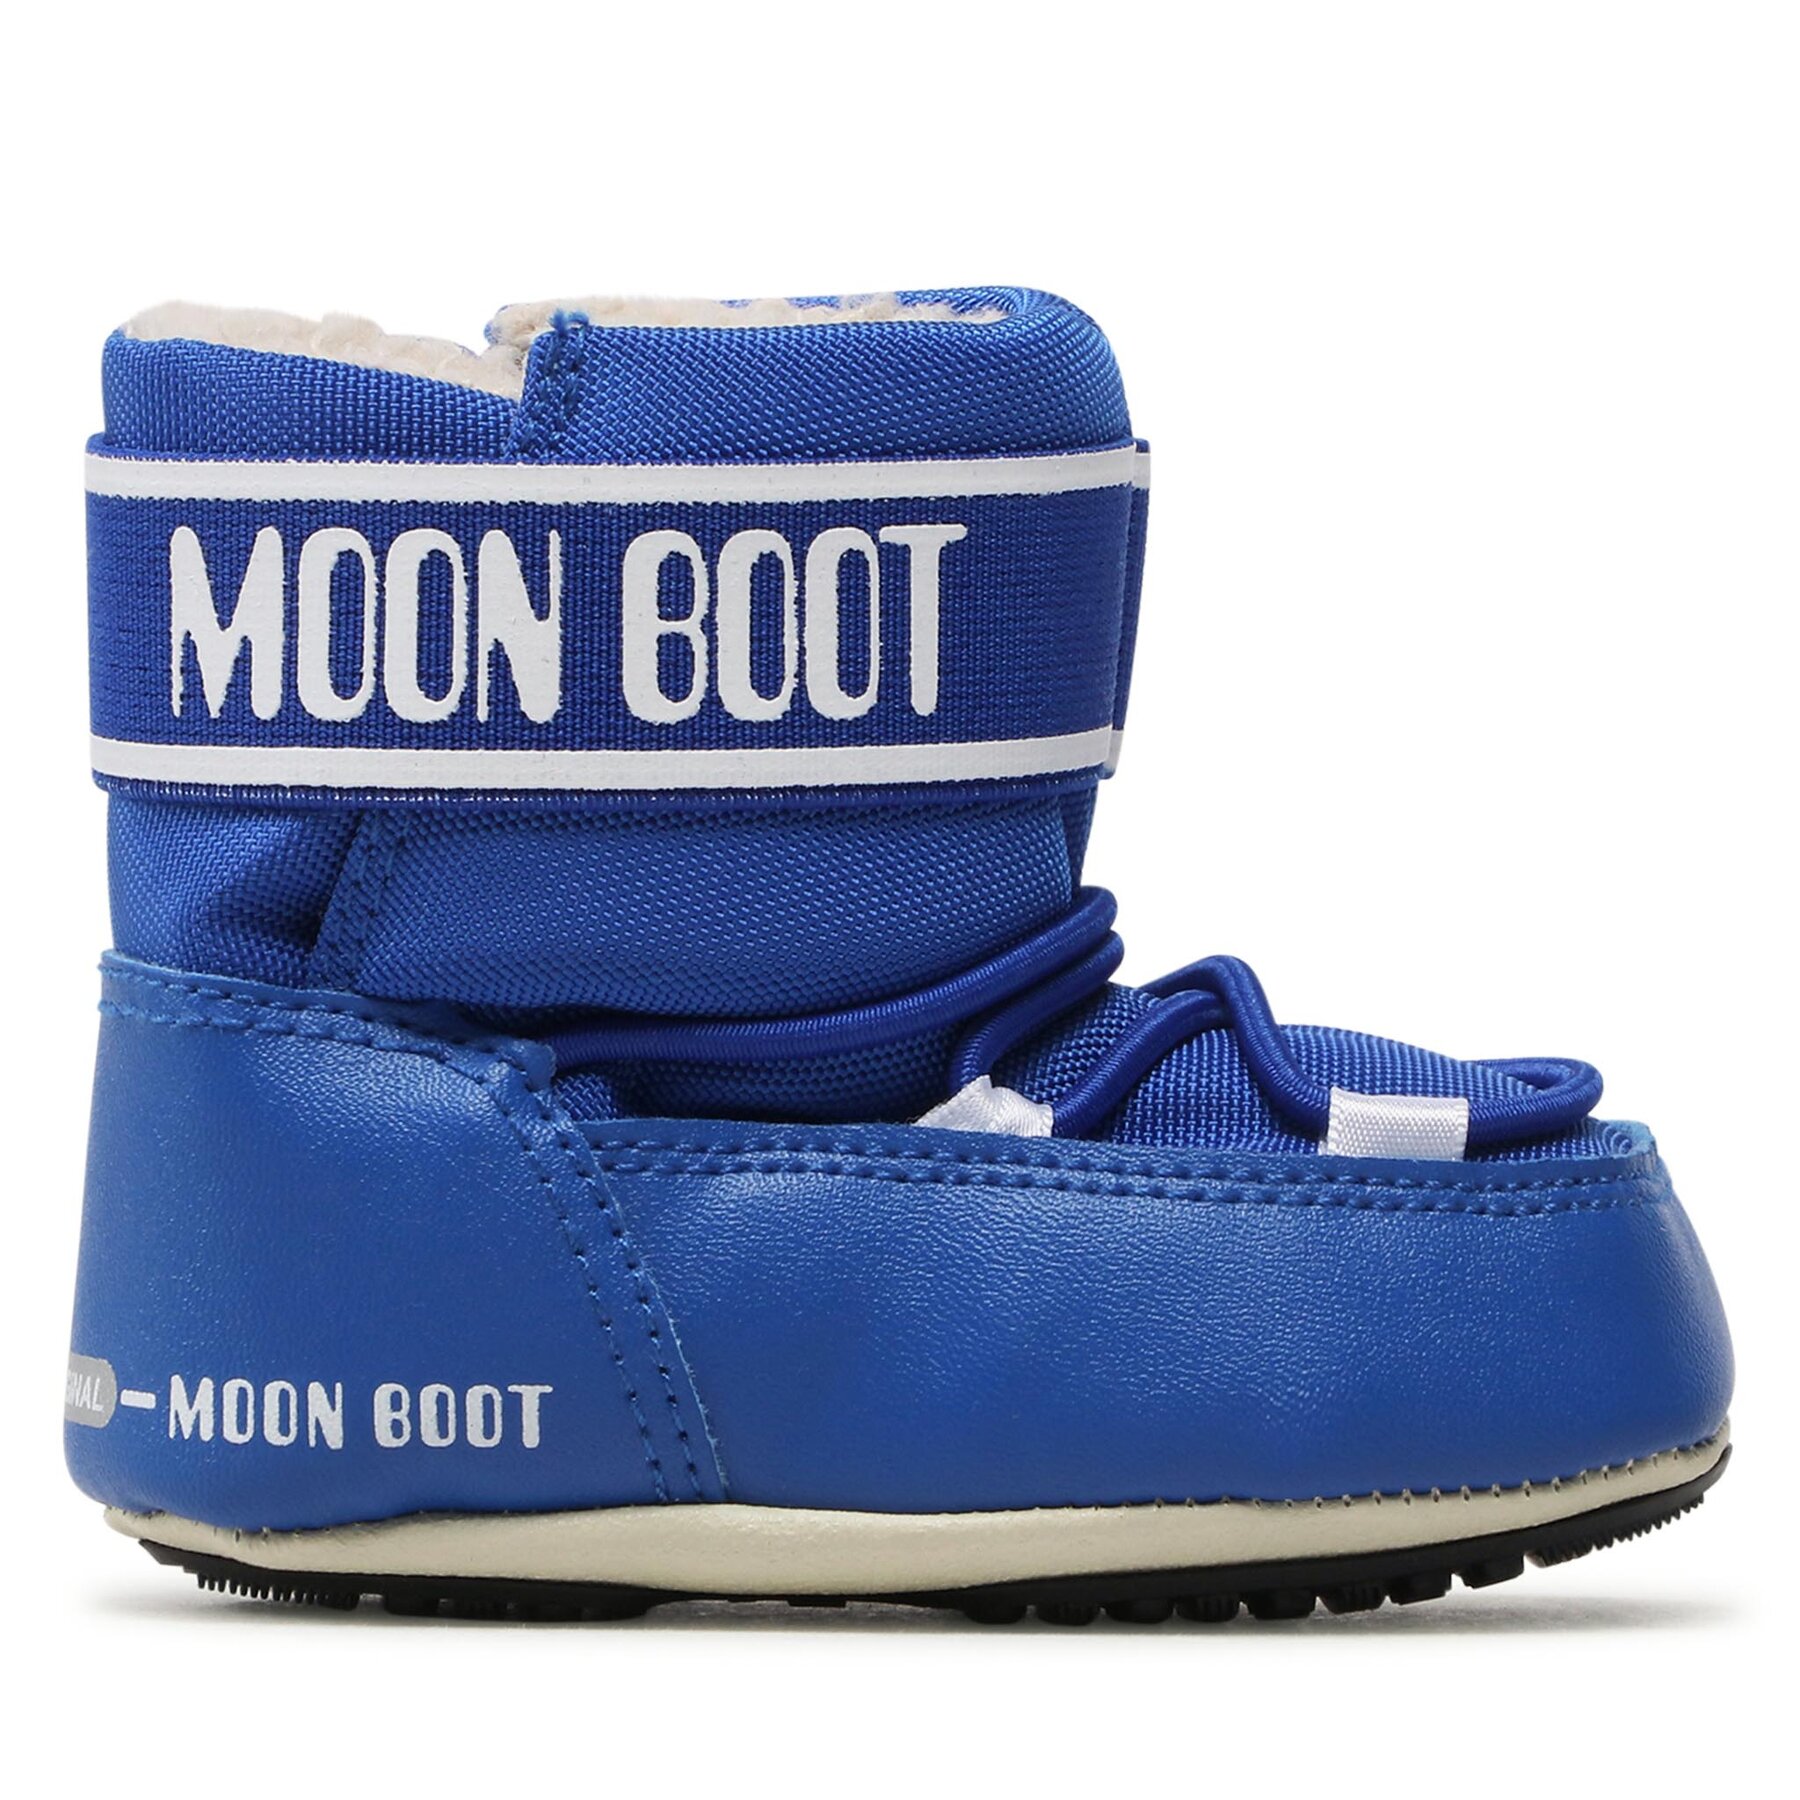 Schneeschuhe Moon Boot Crib 34010200005 Electric Blue von moon boot